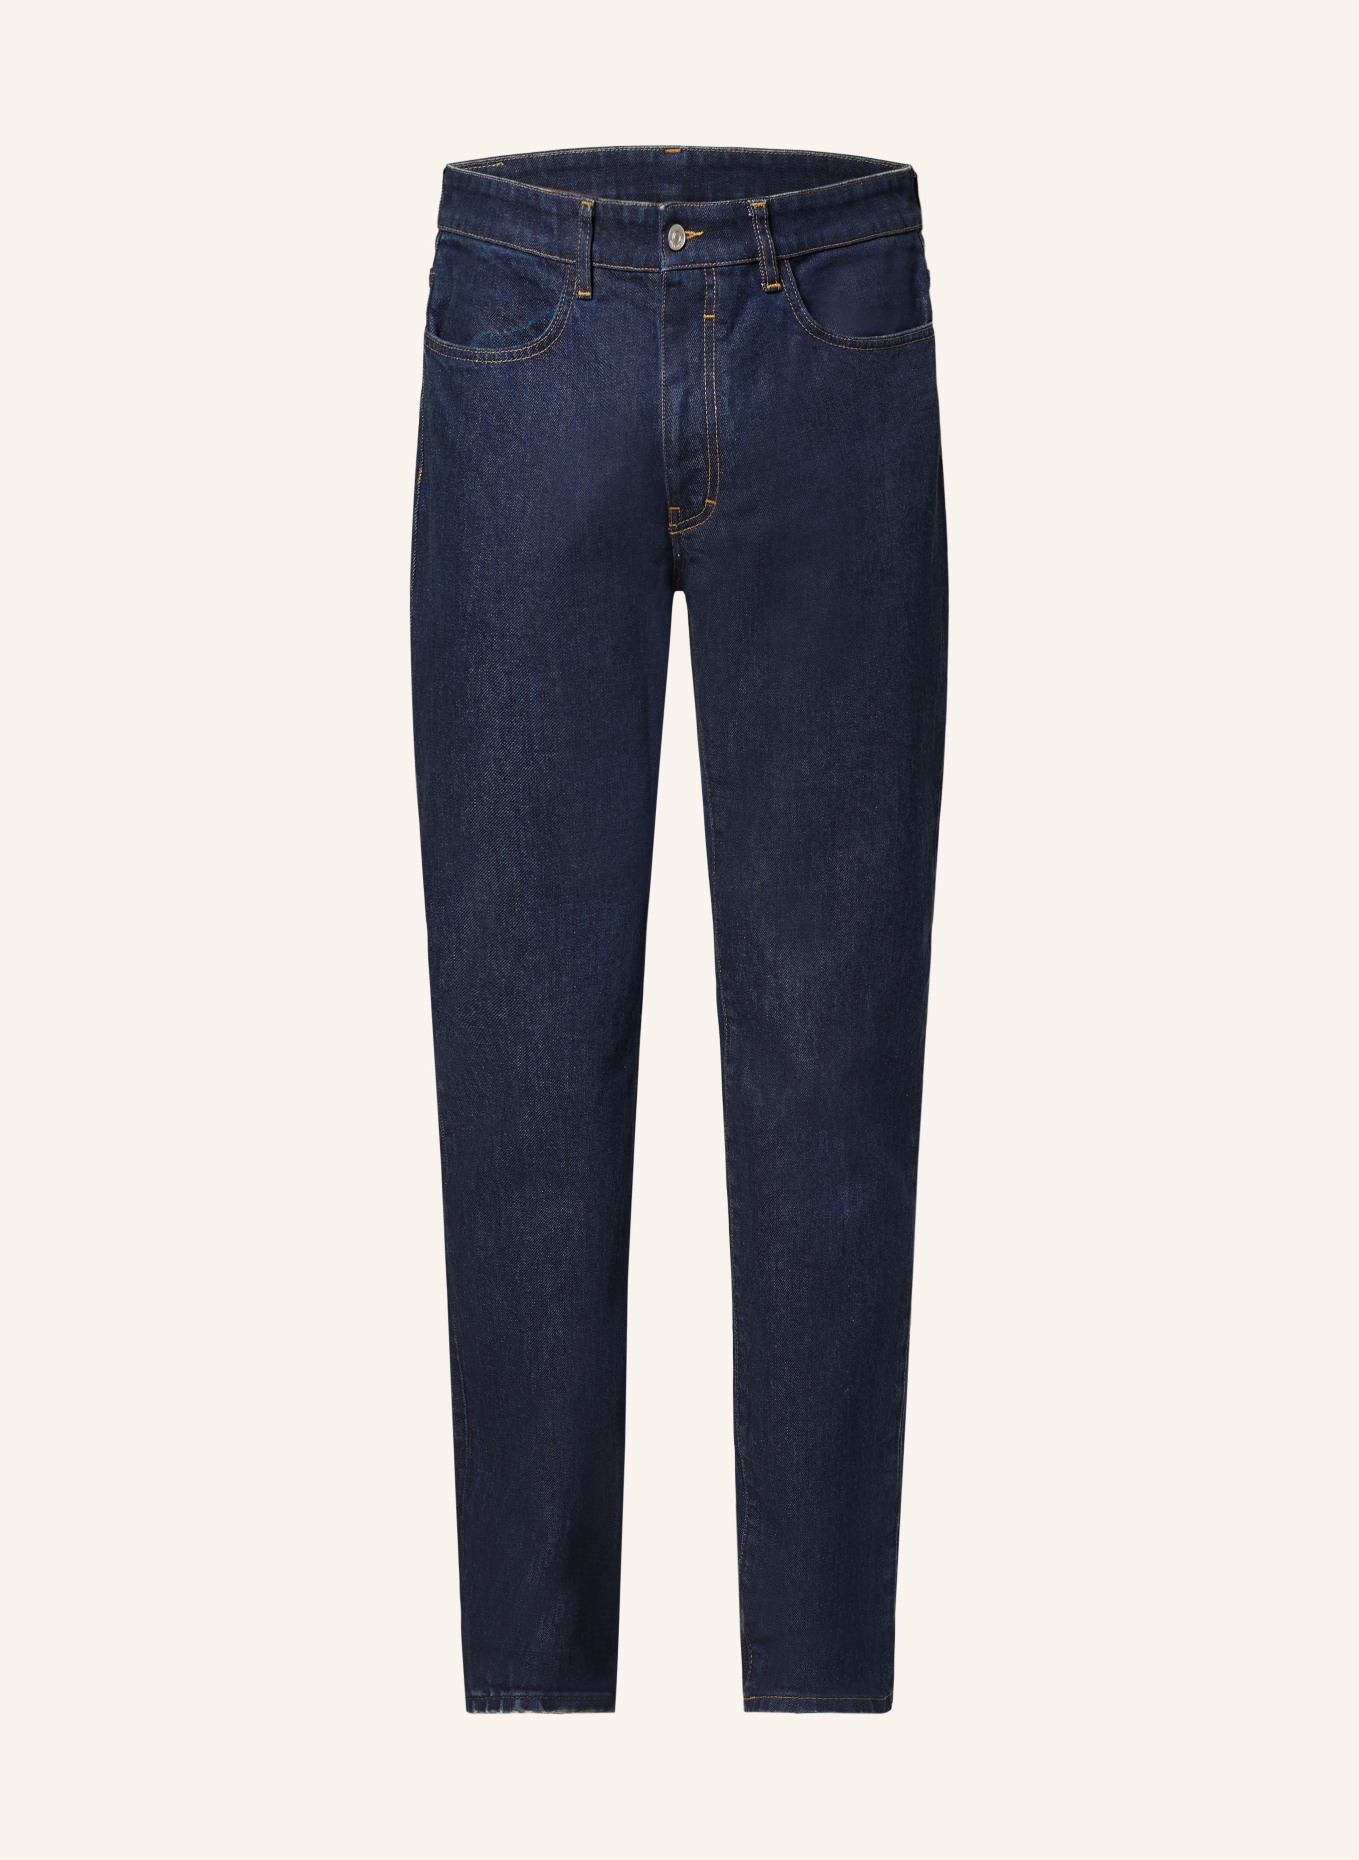 GIVENCHY Jeans Slim Fit, Farbe: 415 INDIGO BLUE (Bild 1)